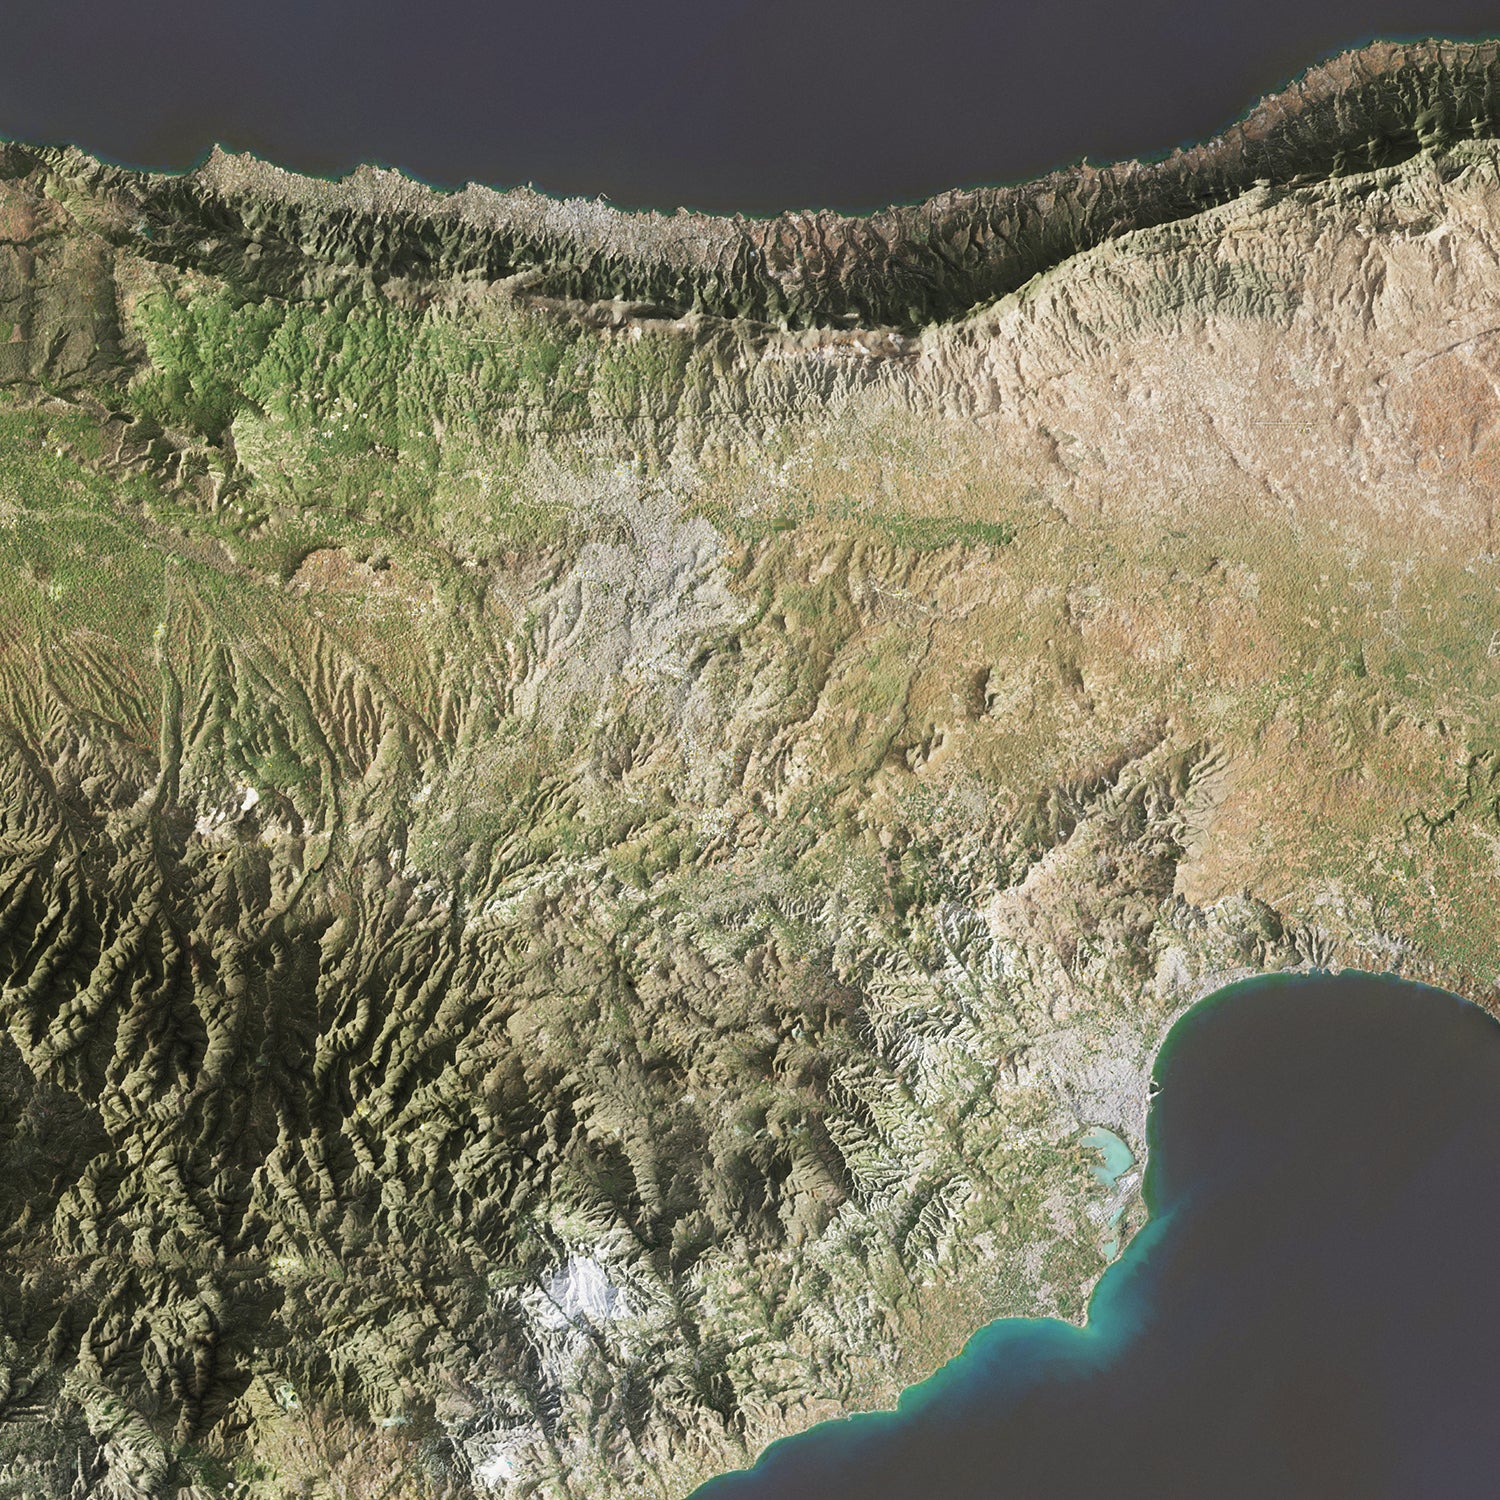 Cyprus - Satellite Imagery